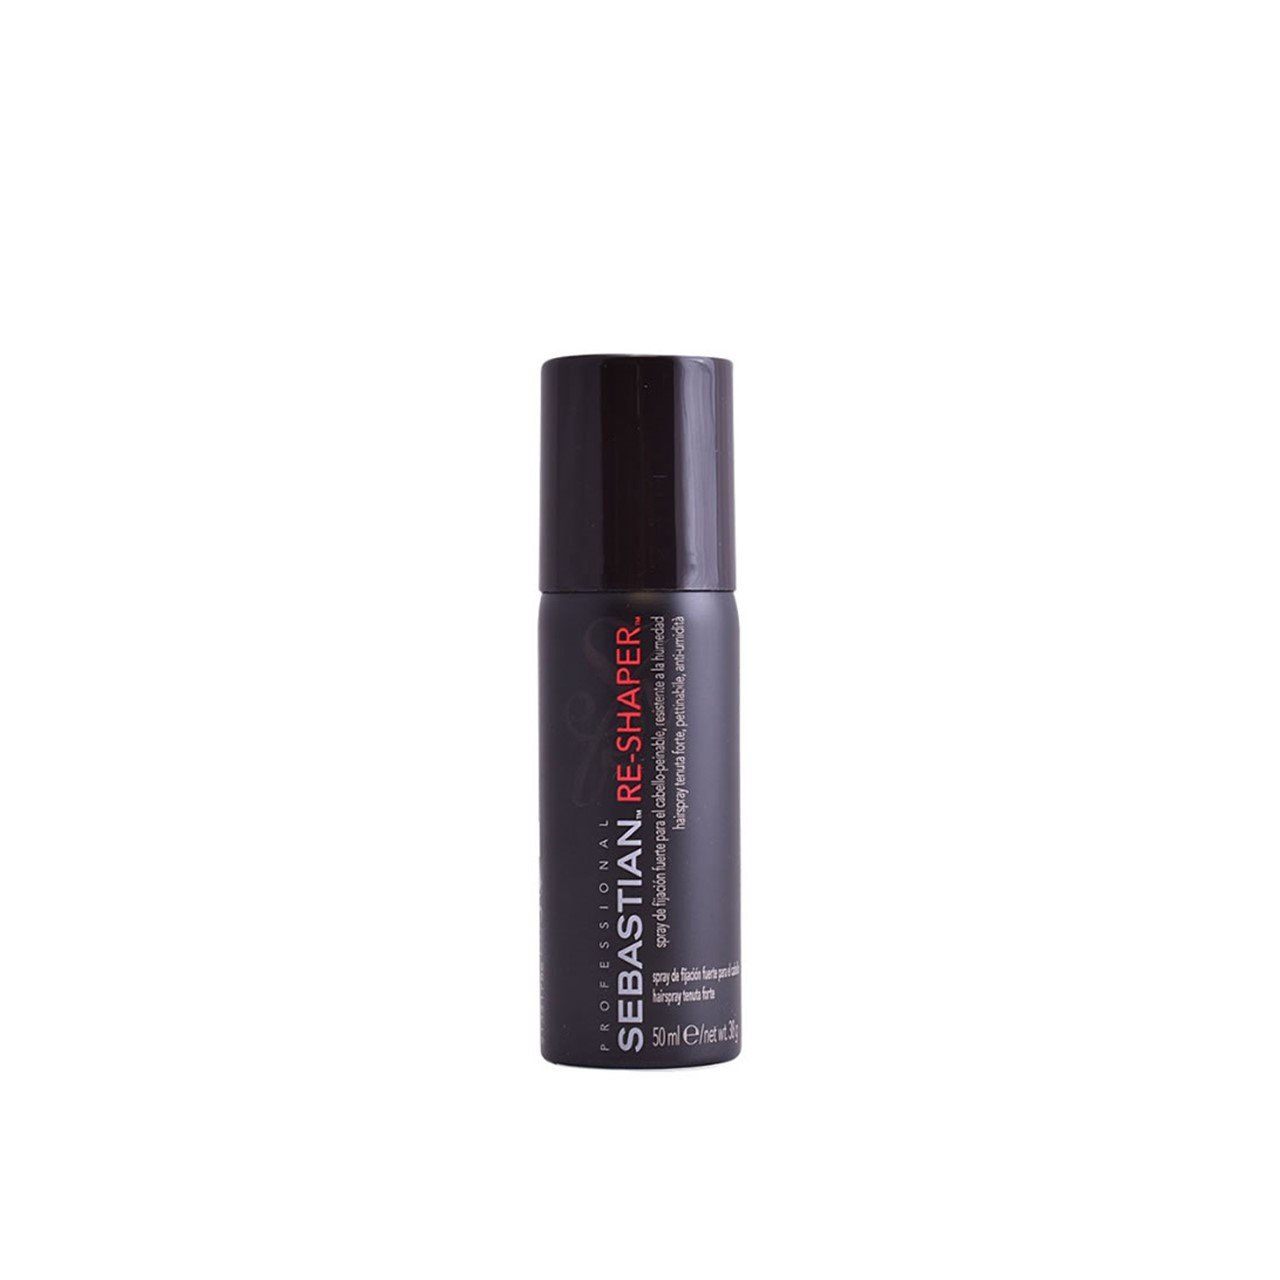 Sebastian Professional Re-Shaper Strong Hold Hairspray 50ml (1.69fl oz)